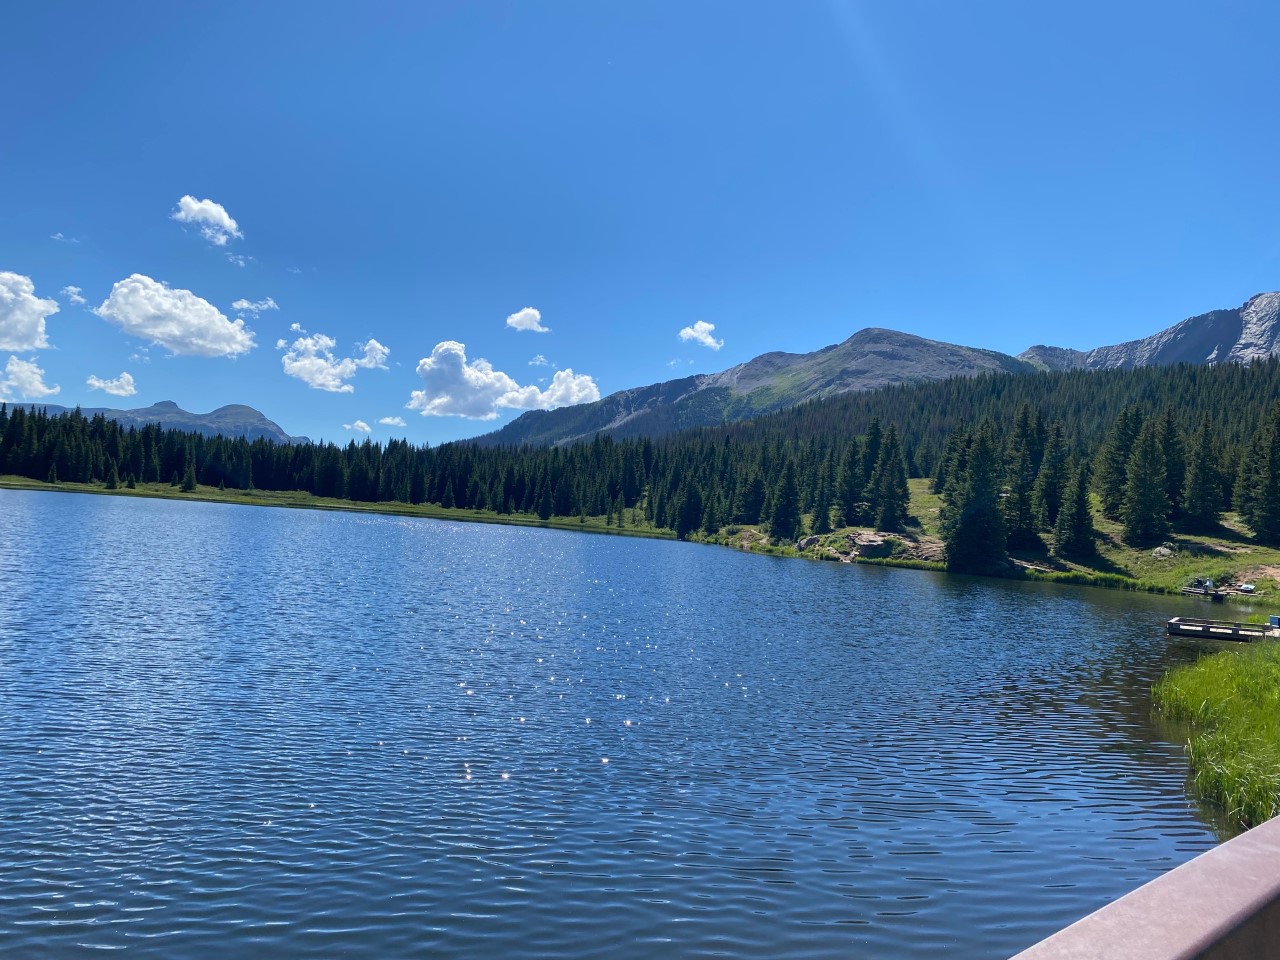 Andrews Lake - an Alpine lake on the Million Dollar Highway